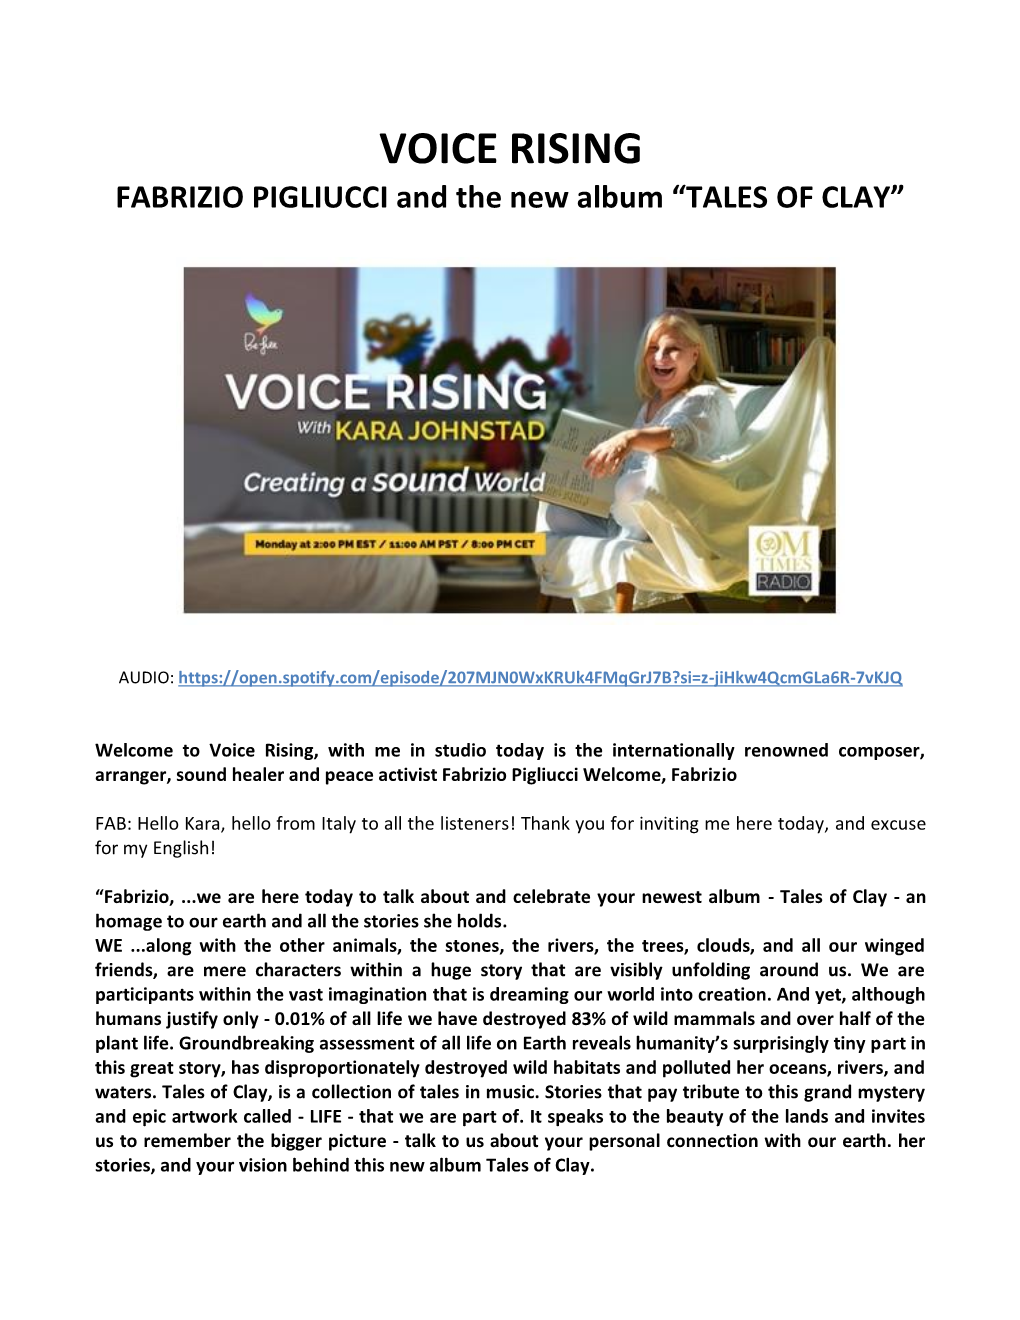 VOICE RISING FABRIZIO PIGLIUCCI and the New Album “TALES of CLAY”